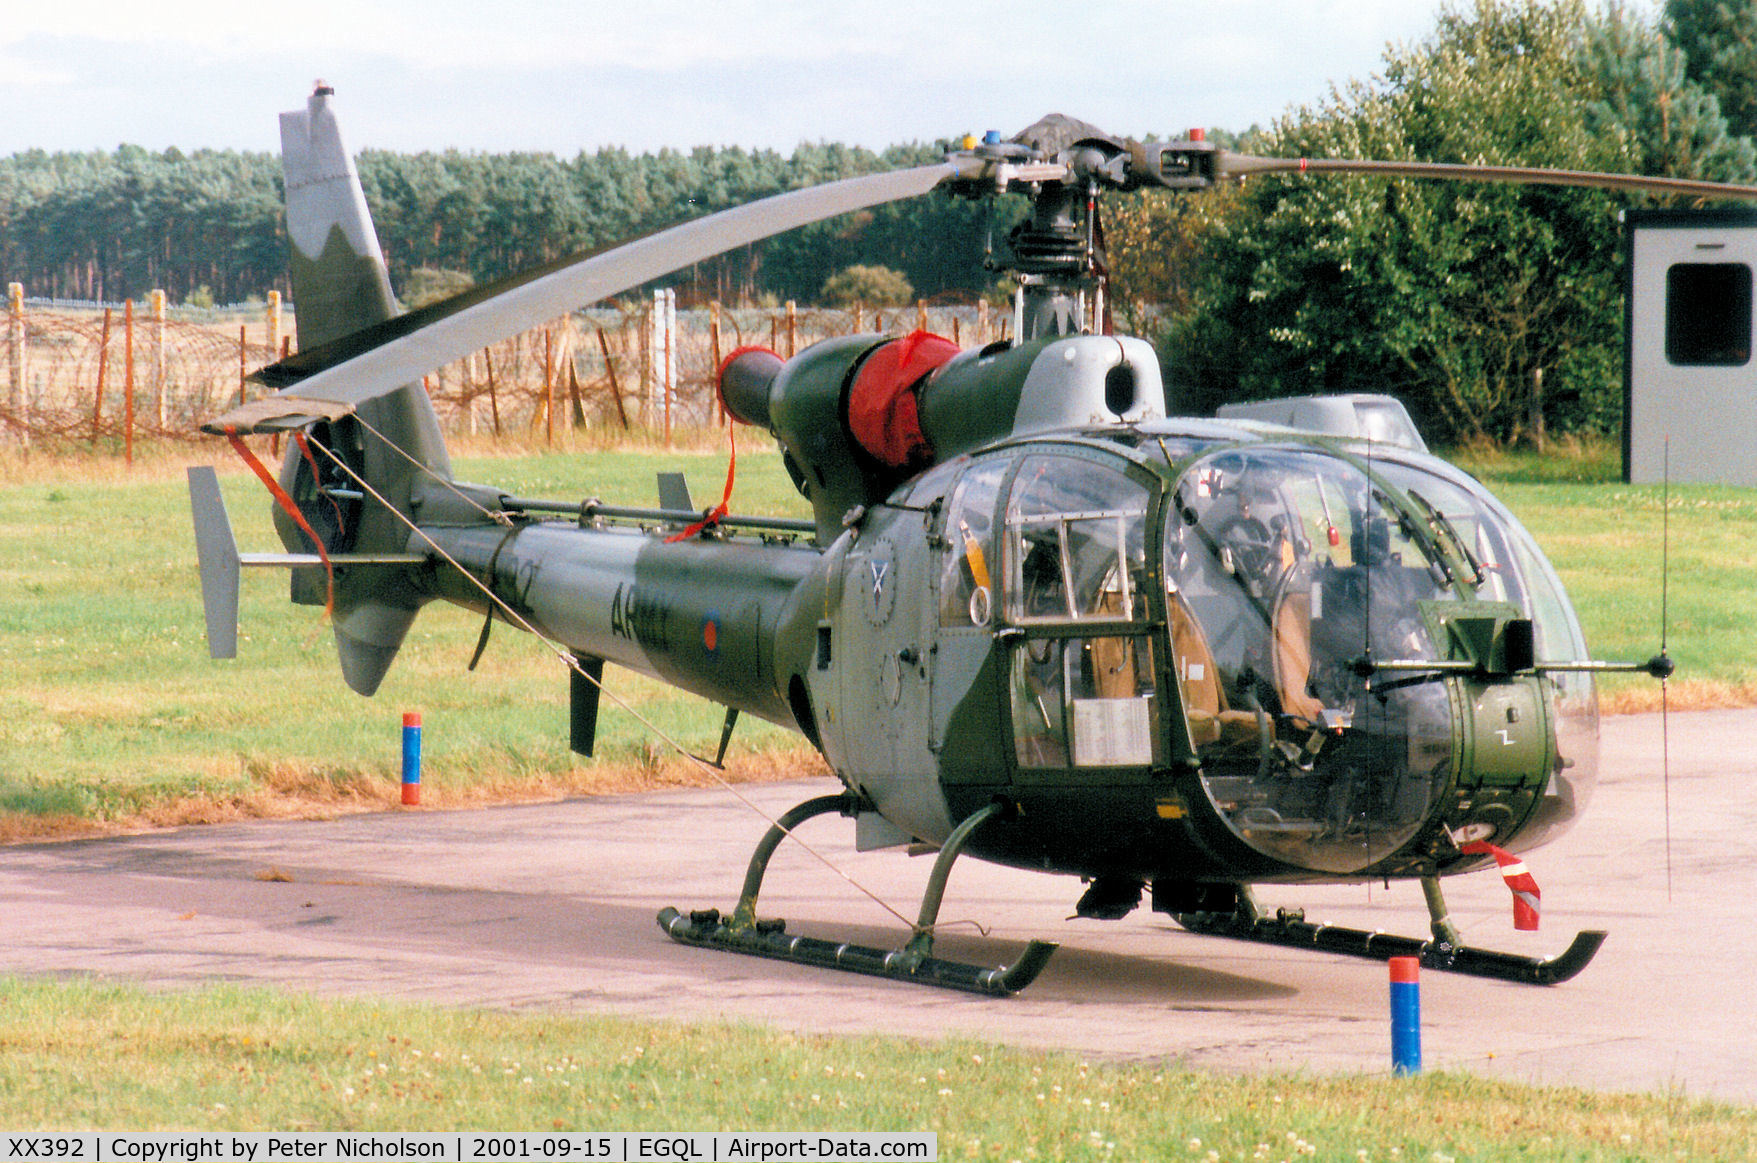 XX392, 1975 Westland SA-341B Gazelle AH1 C/N 1302, Gazelle AH.1 of 3[V] Flight based at RAF Leuchars as seen at he 2001 RAF Leuchars Airshow.